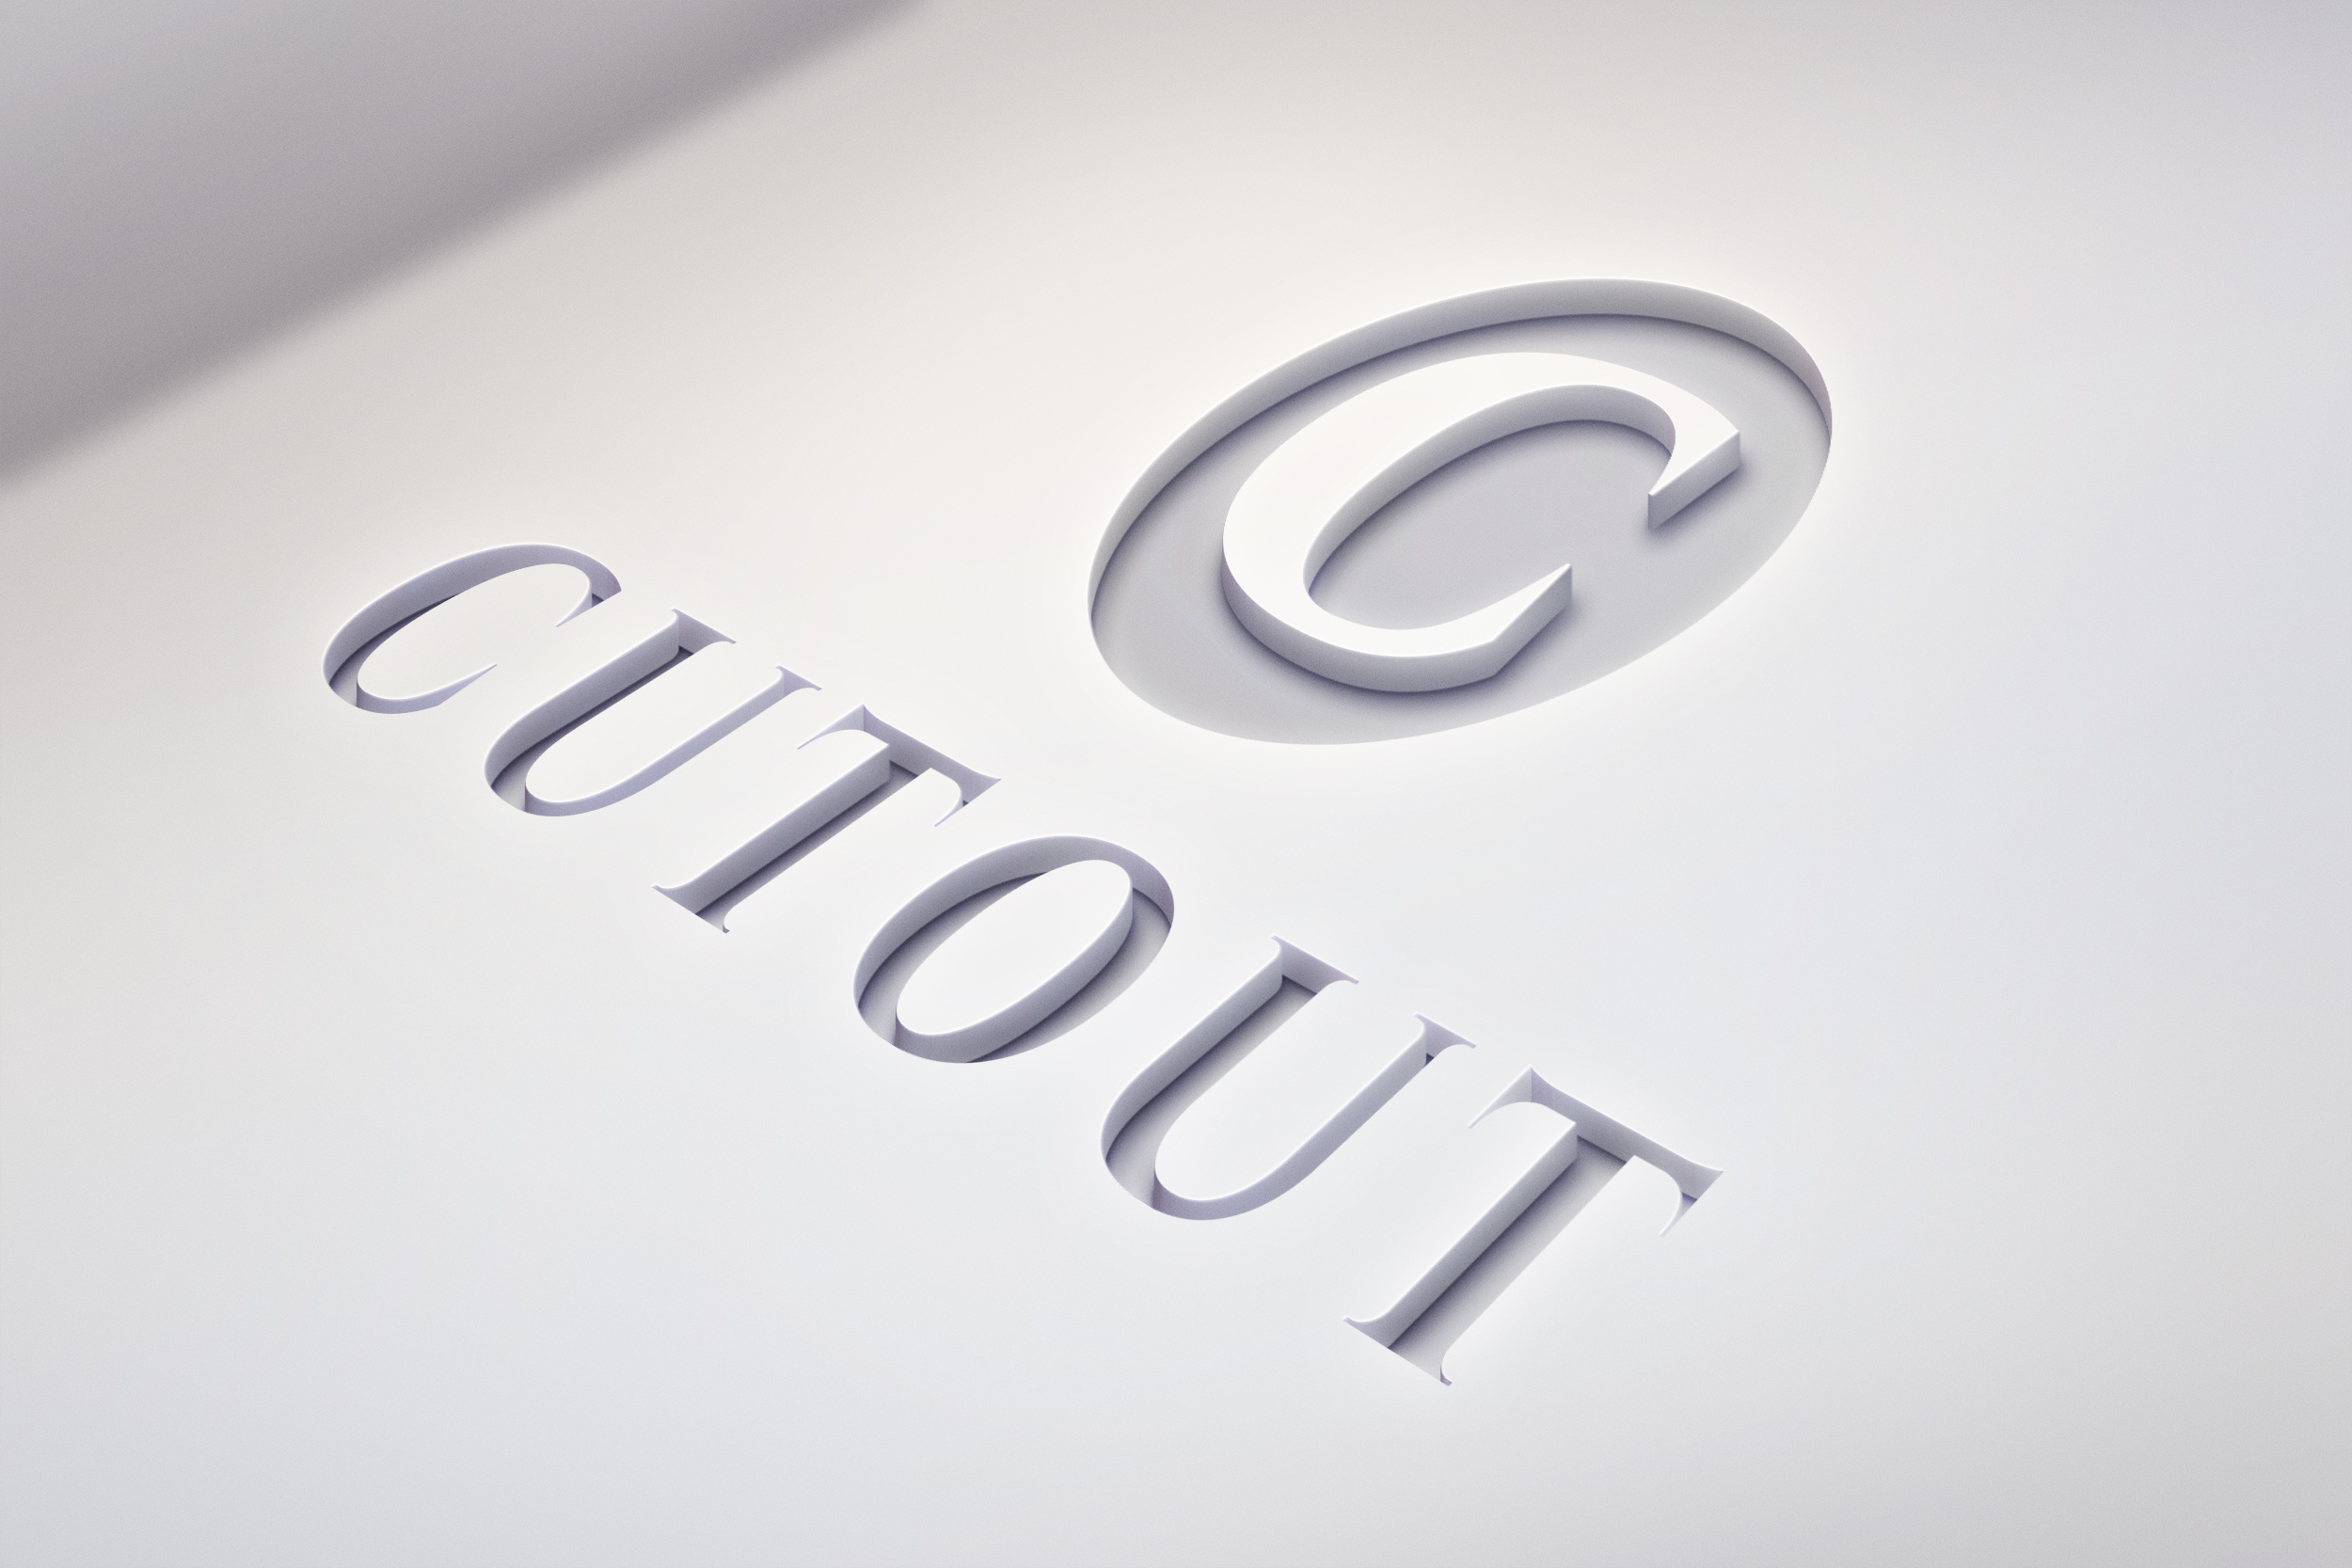 Cutout Clean Logo MockUp Psd Free Download